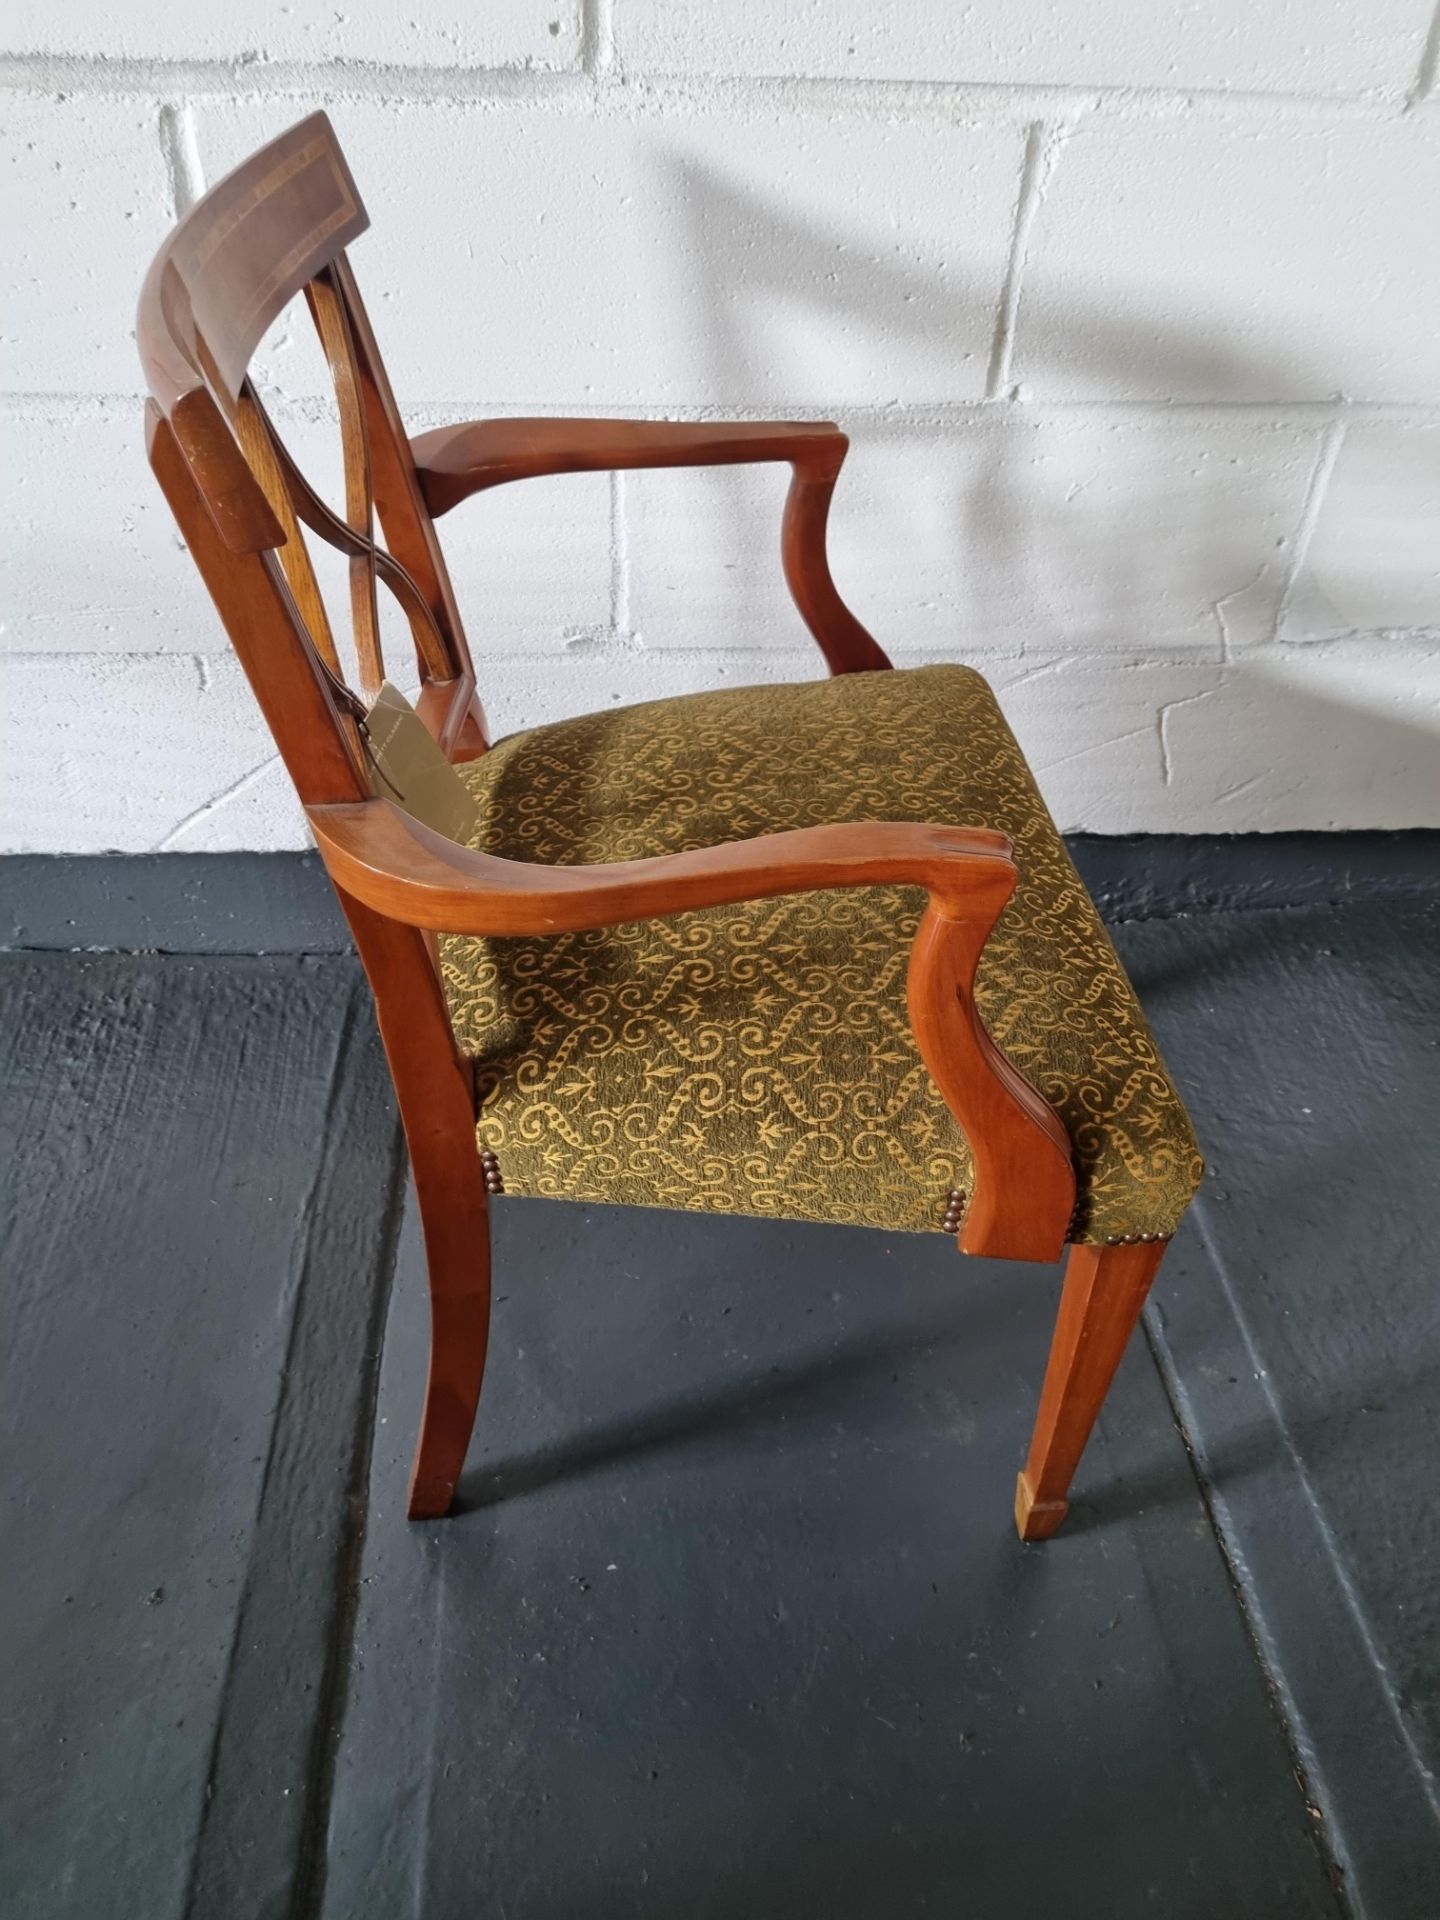 Arthur Brett Armchair Bespoke Sage/Gold Upholstery Sheraton-Style Cherrywood Armchair With Tulip- - Image 4 of 4